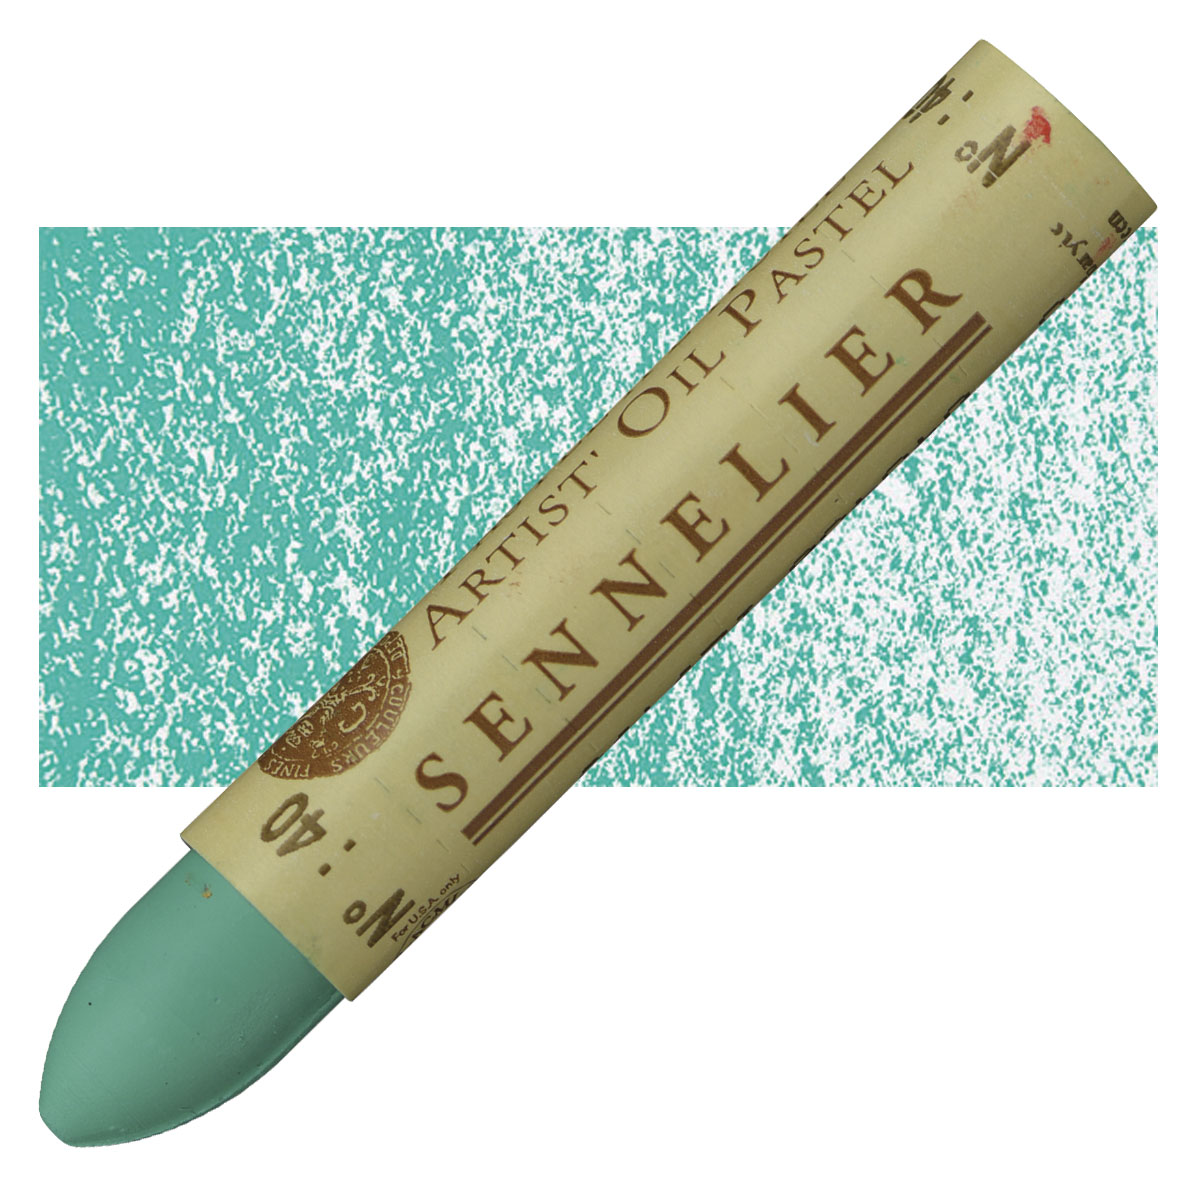 Sennelier Oil Pastels – Rileystreet Art Supply